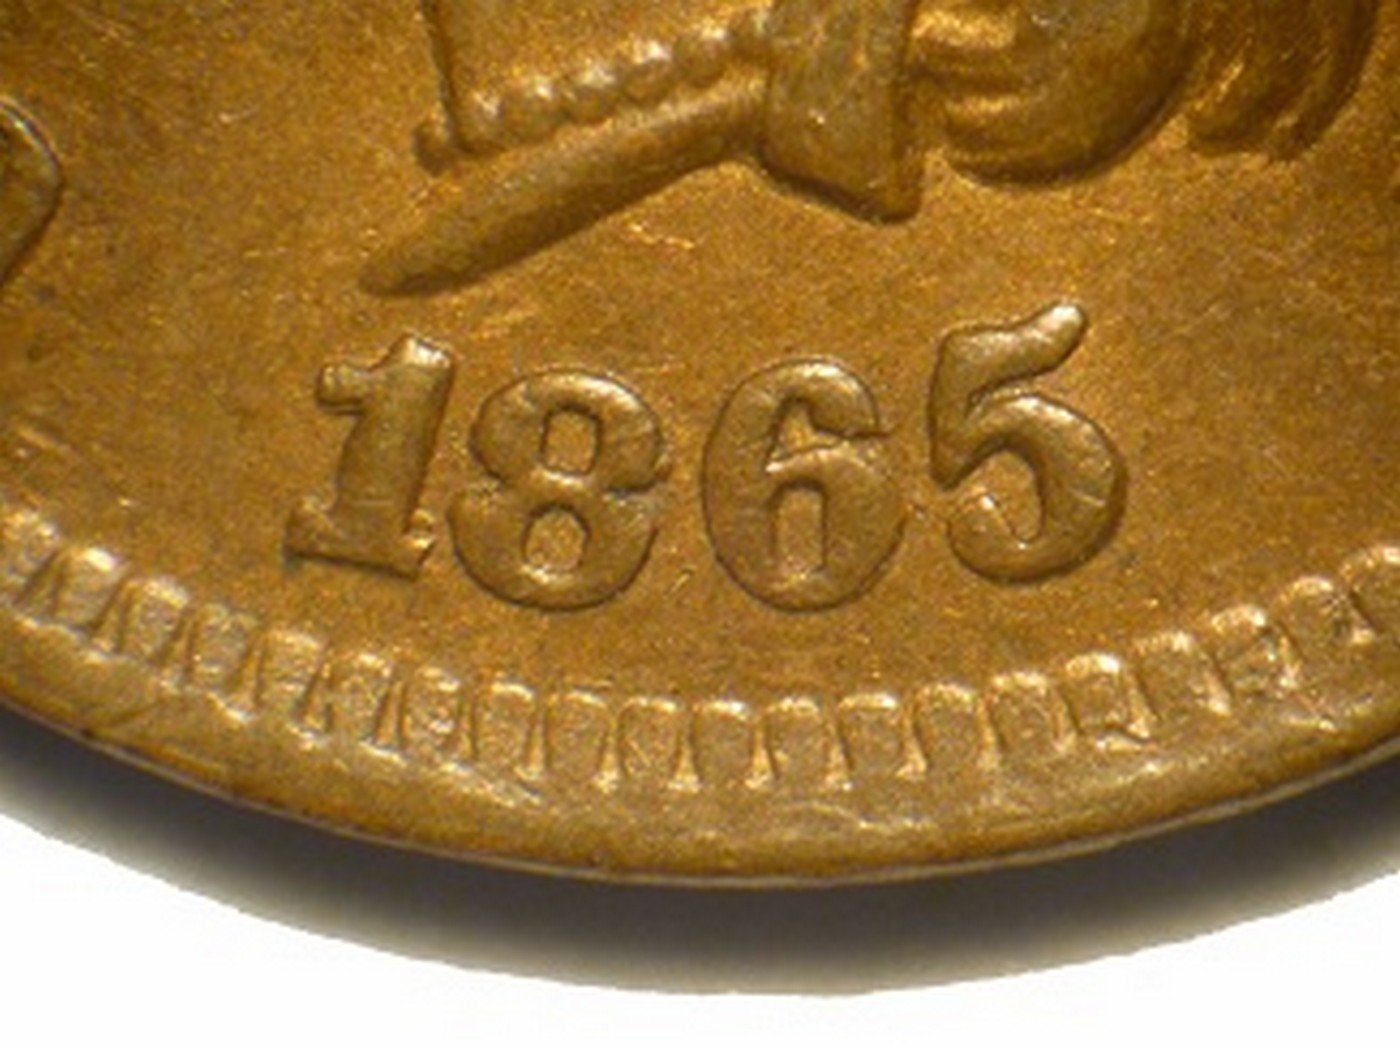 1865 Plain 5 RPD-011 - Indian Head Penny - Photo by David Poliquin